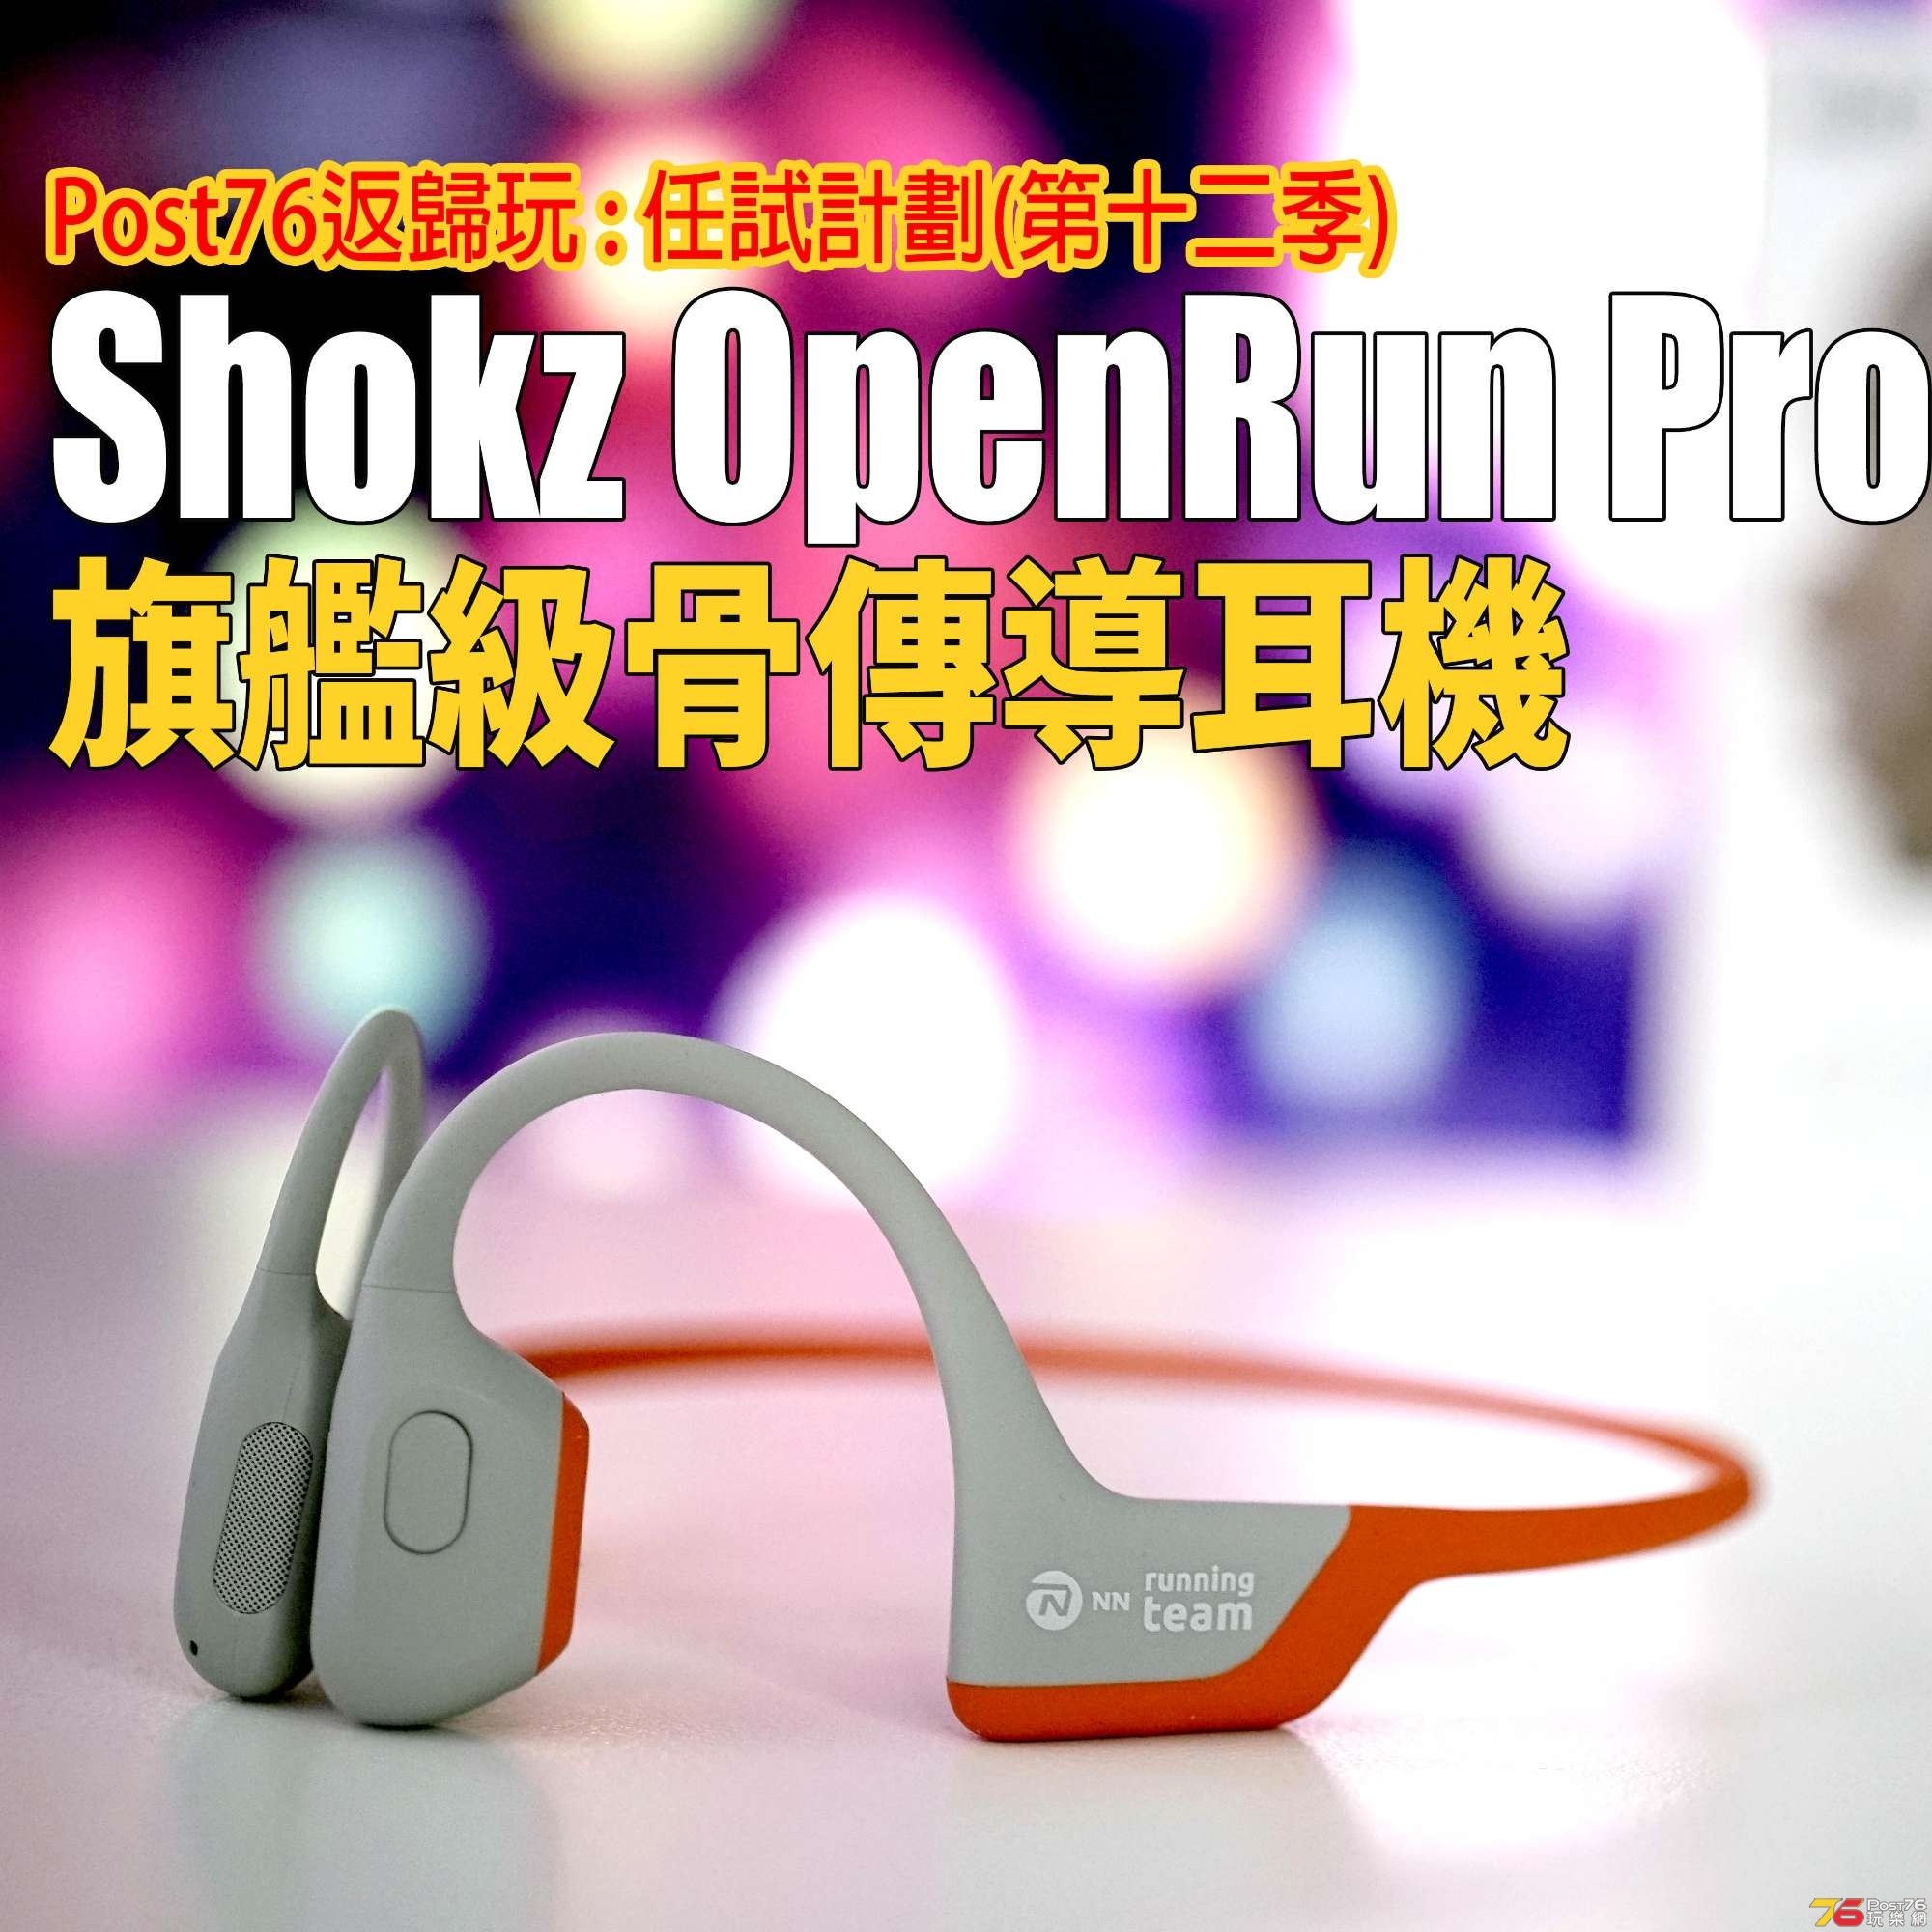 Shokz OpenRun Pro 骨傳導耳機試玩平台: 任試計劃(第十二季) - 耳機